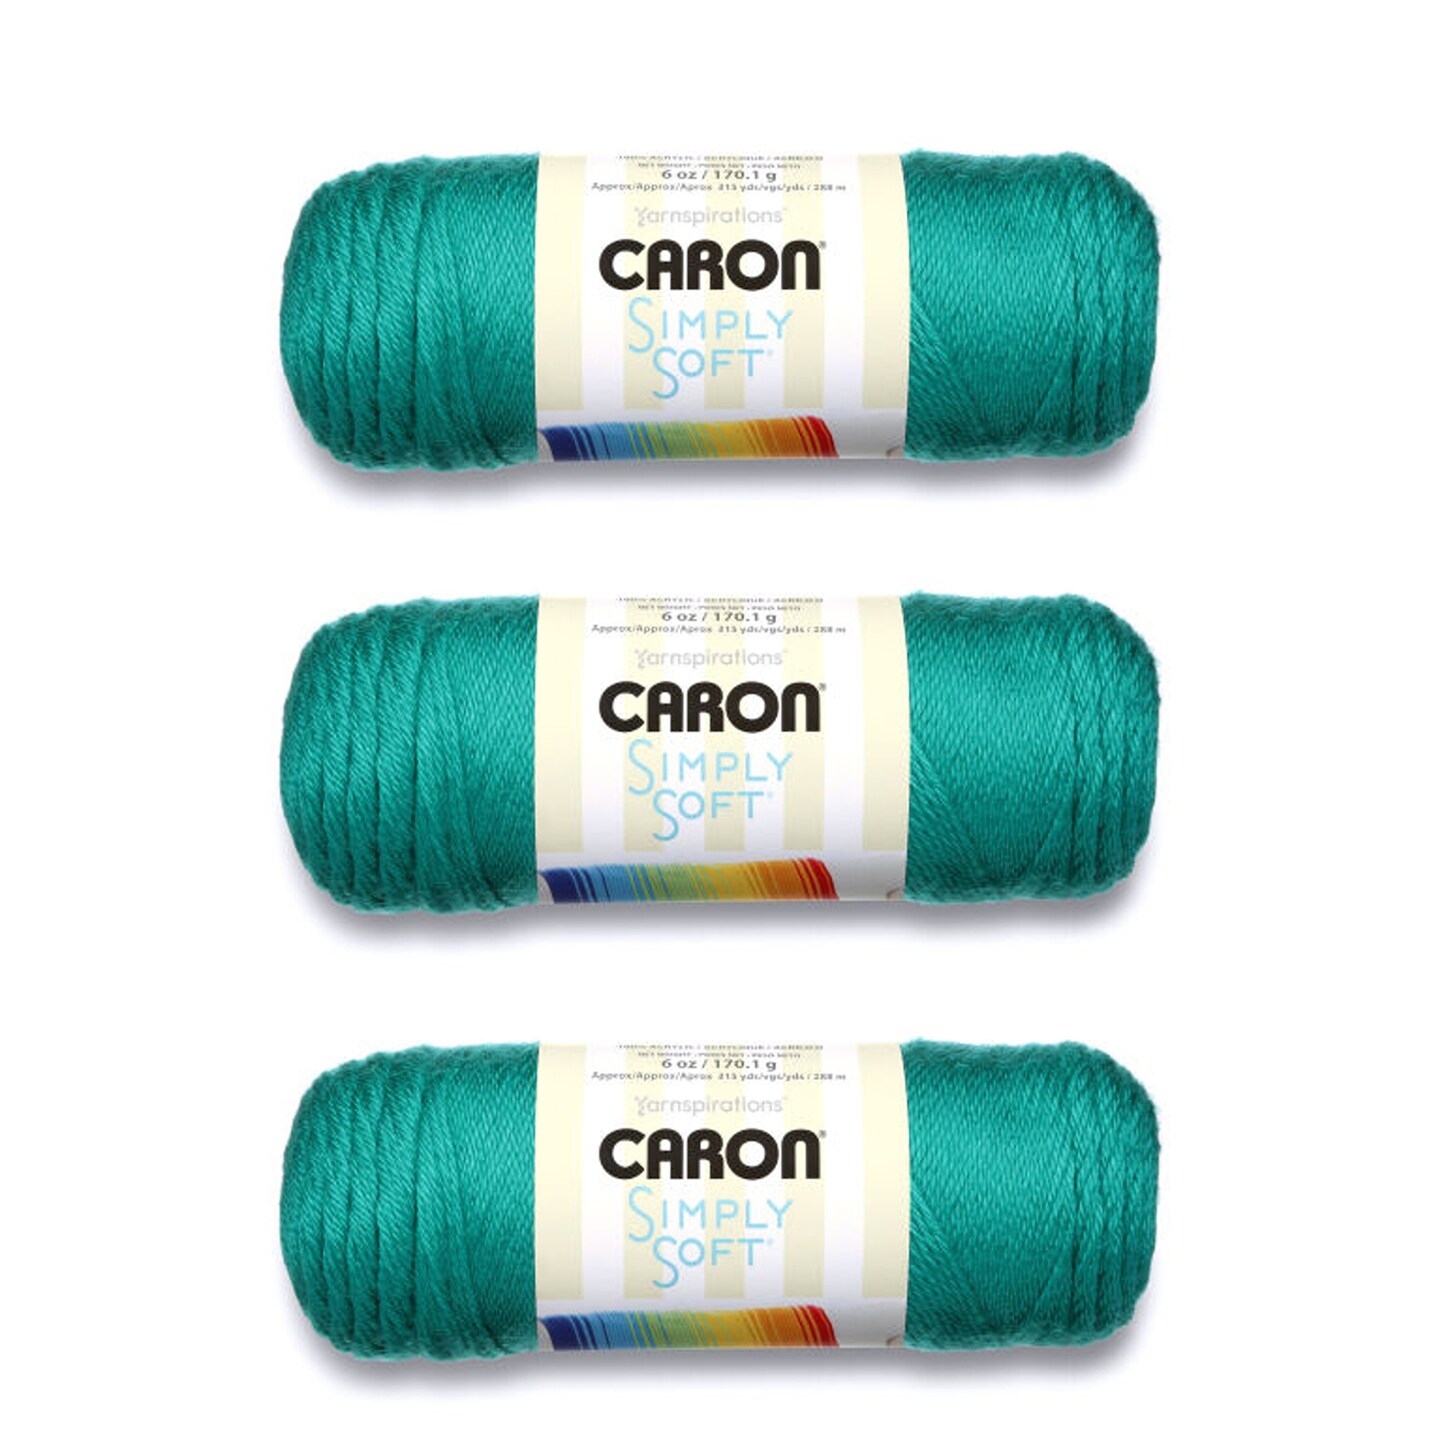 Caron Simply Soft Cool Green Yarn - 3 Pack of 170g/6oz - Acrylic - 4 Medium  (Worsted) - 315 Yards - Knitting/Crochet